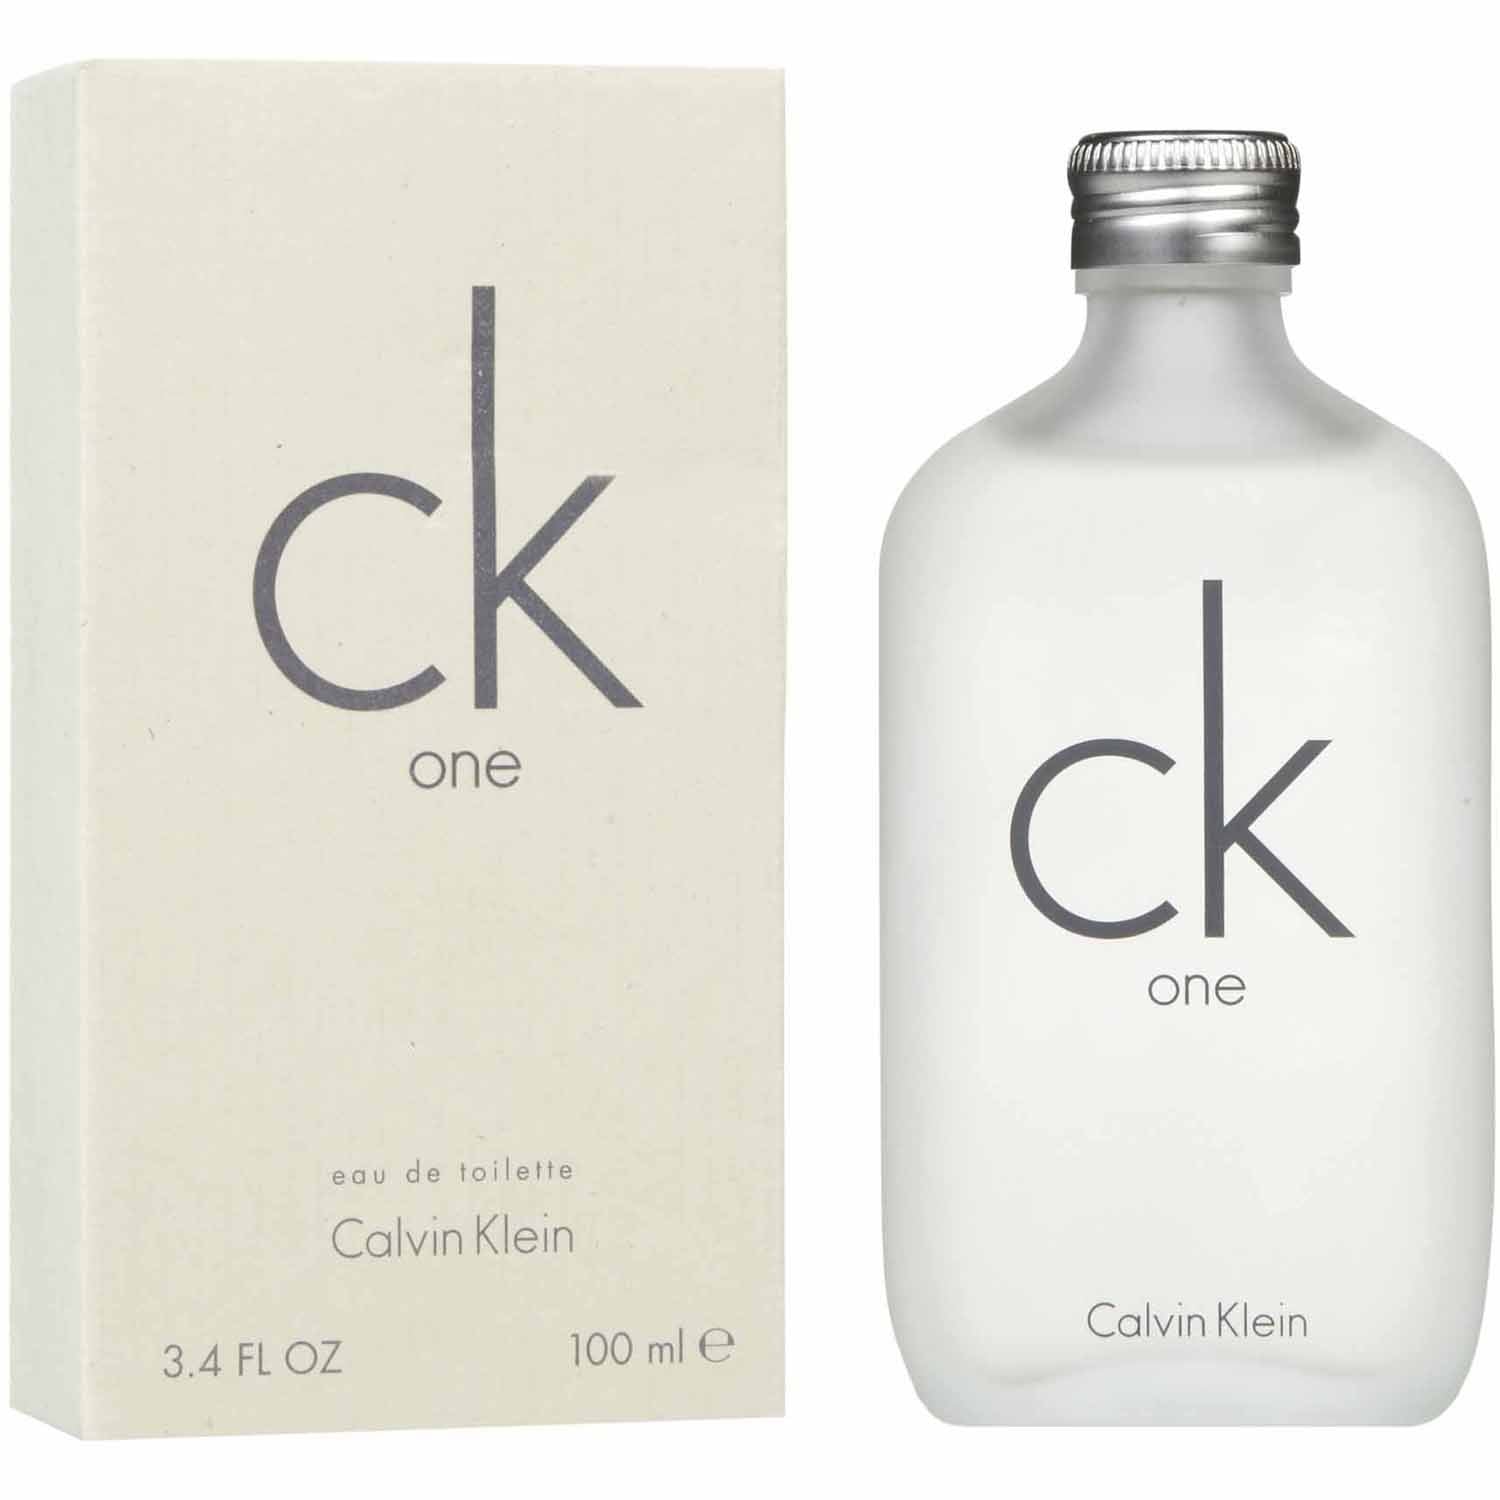 Perfume Ck One Unisex de Calvin Klein 100ml